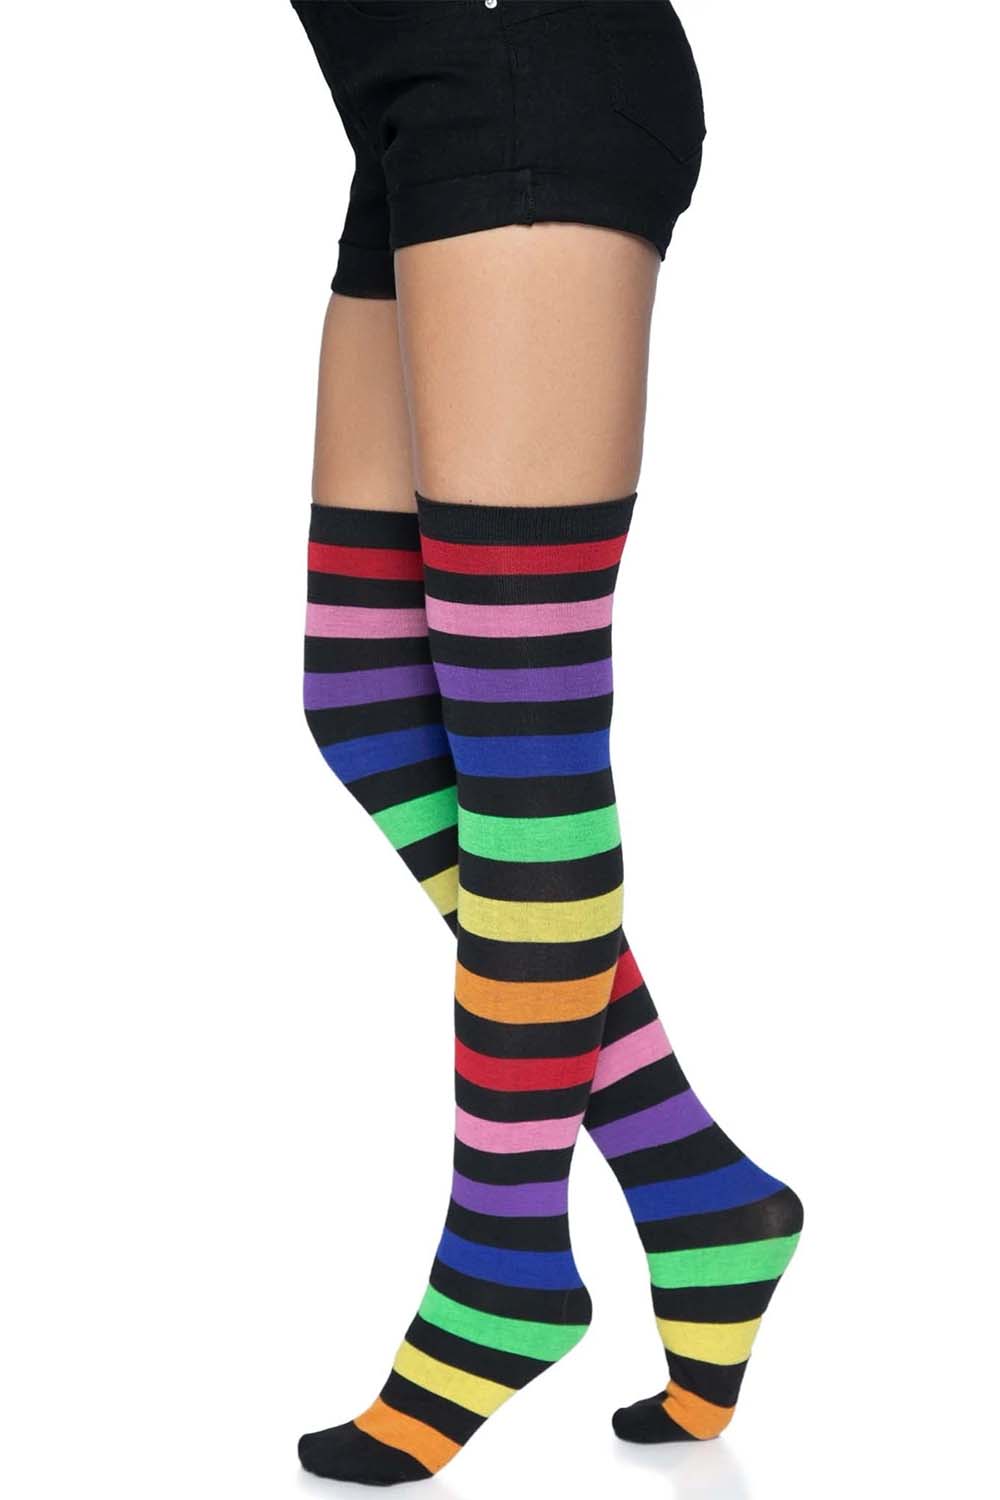 Emo Rainbow Thigh High Socks